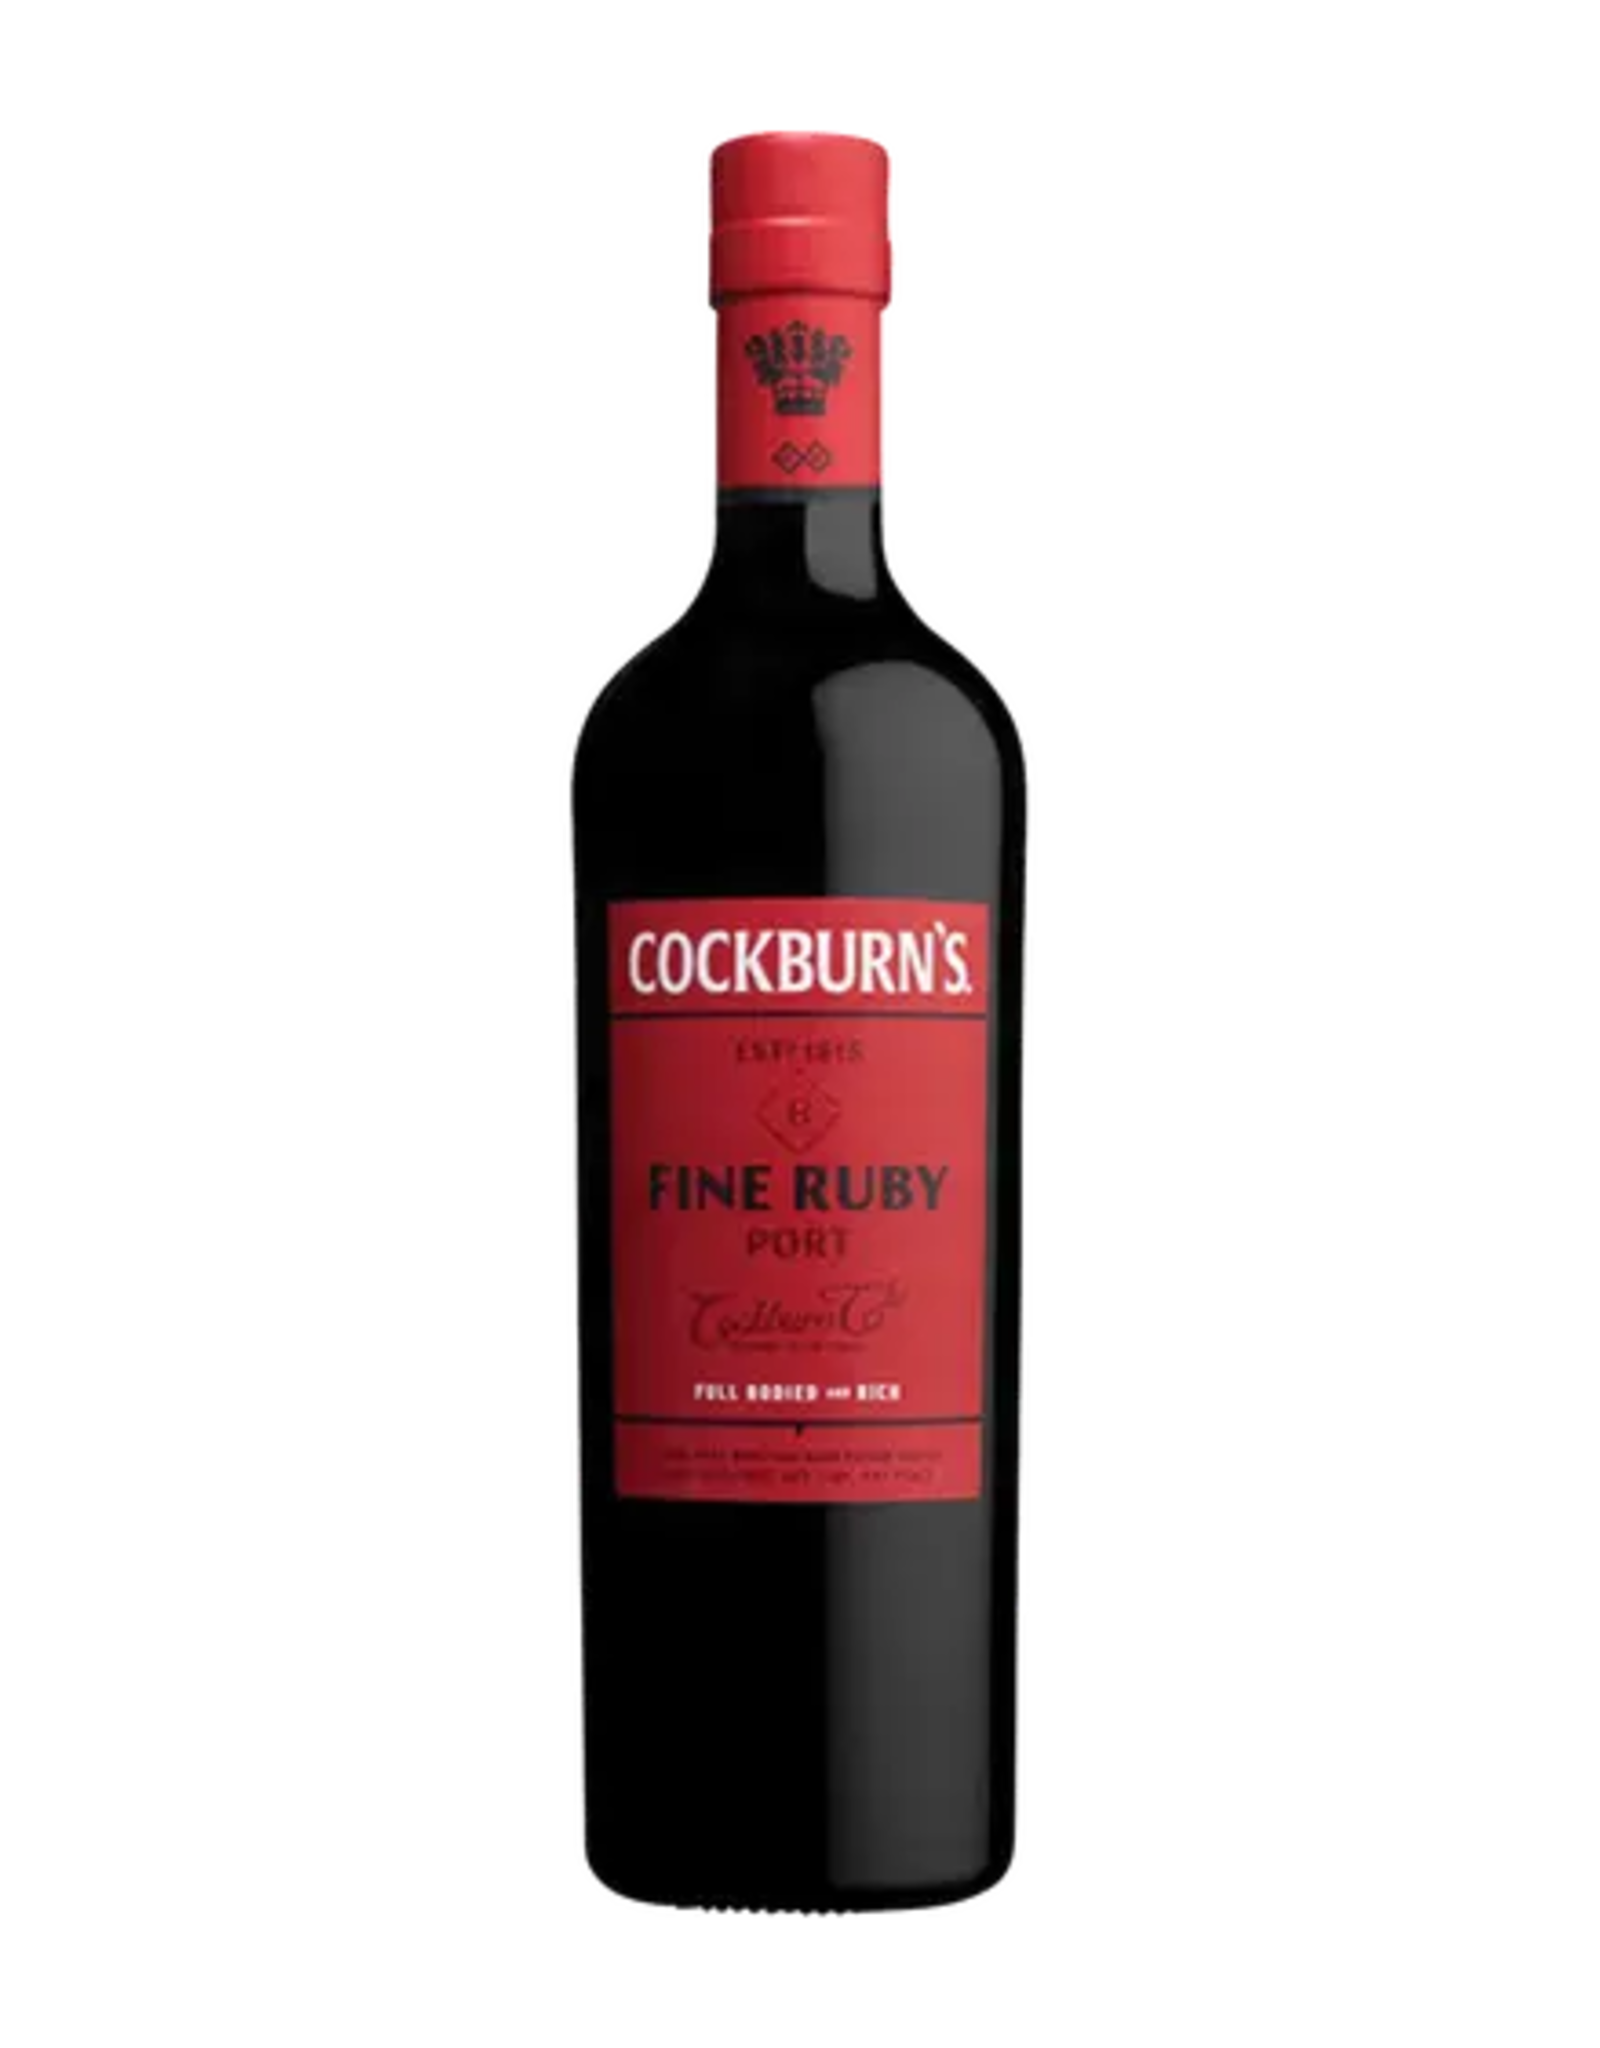 Cockburns Port Fine Ruby